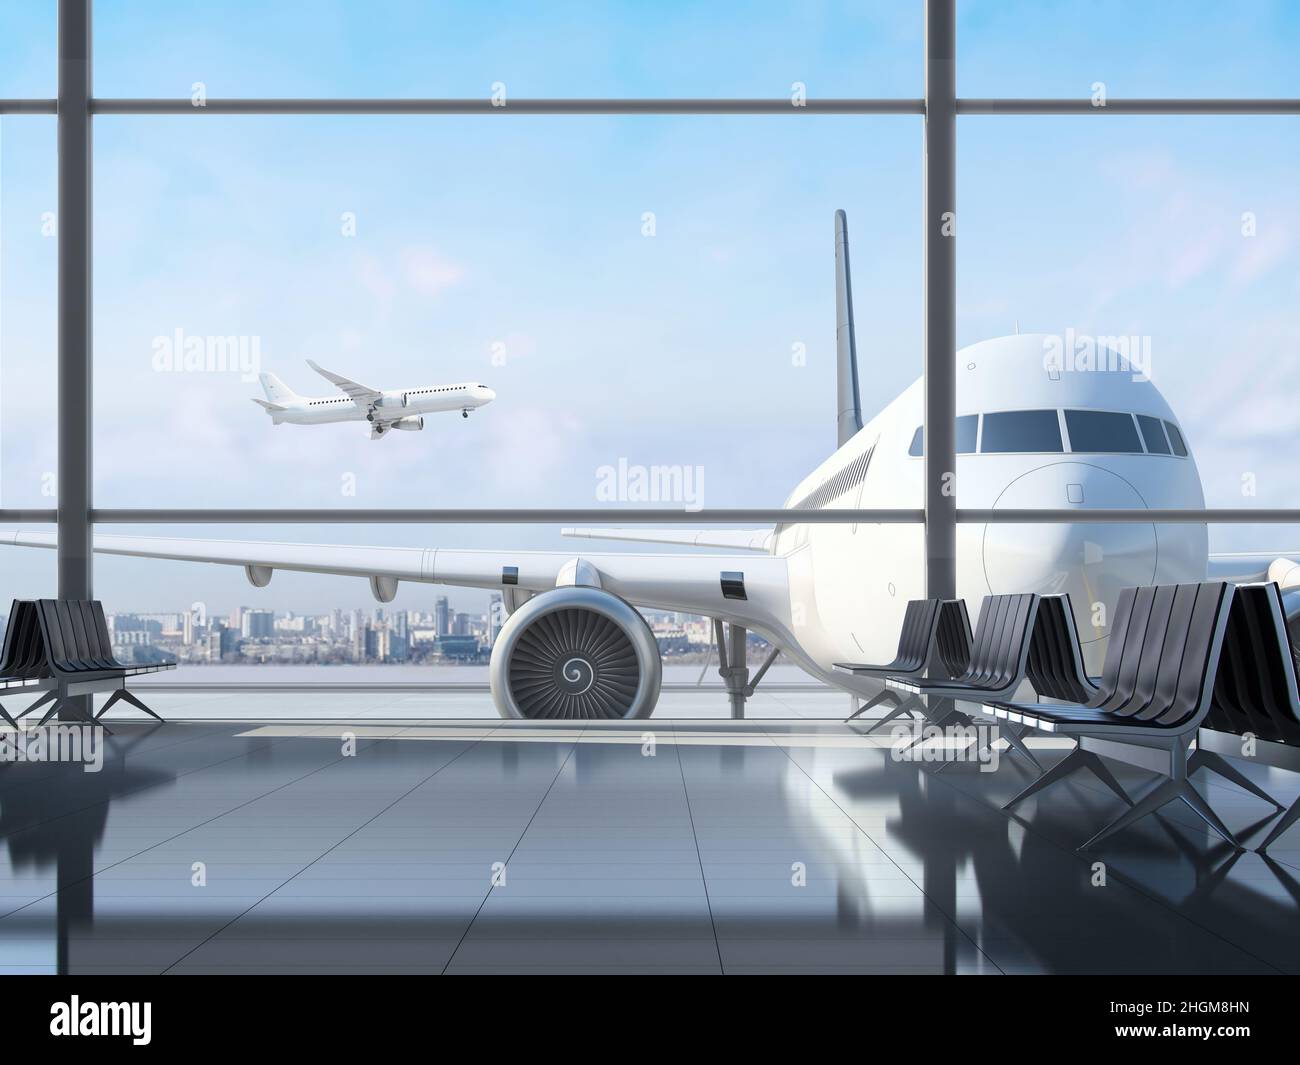 Airport terminal, illustration Stock Photo